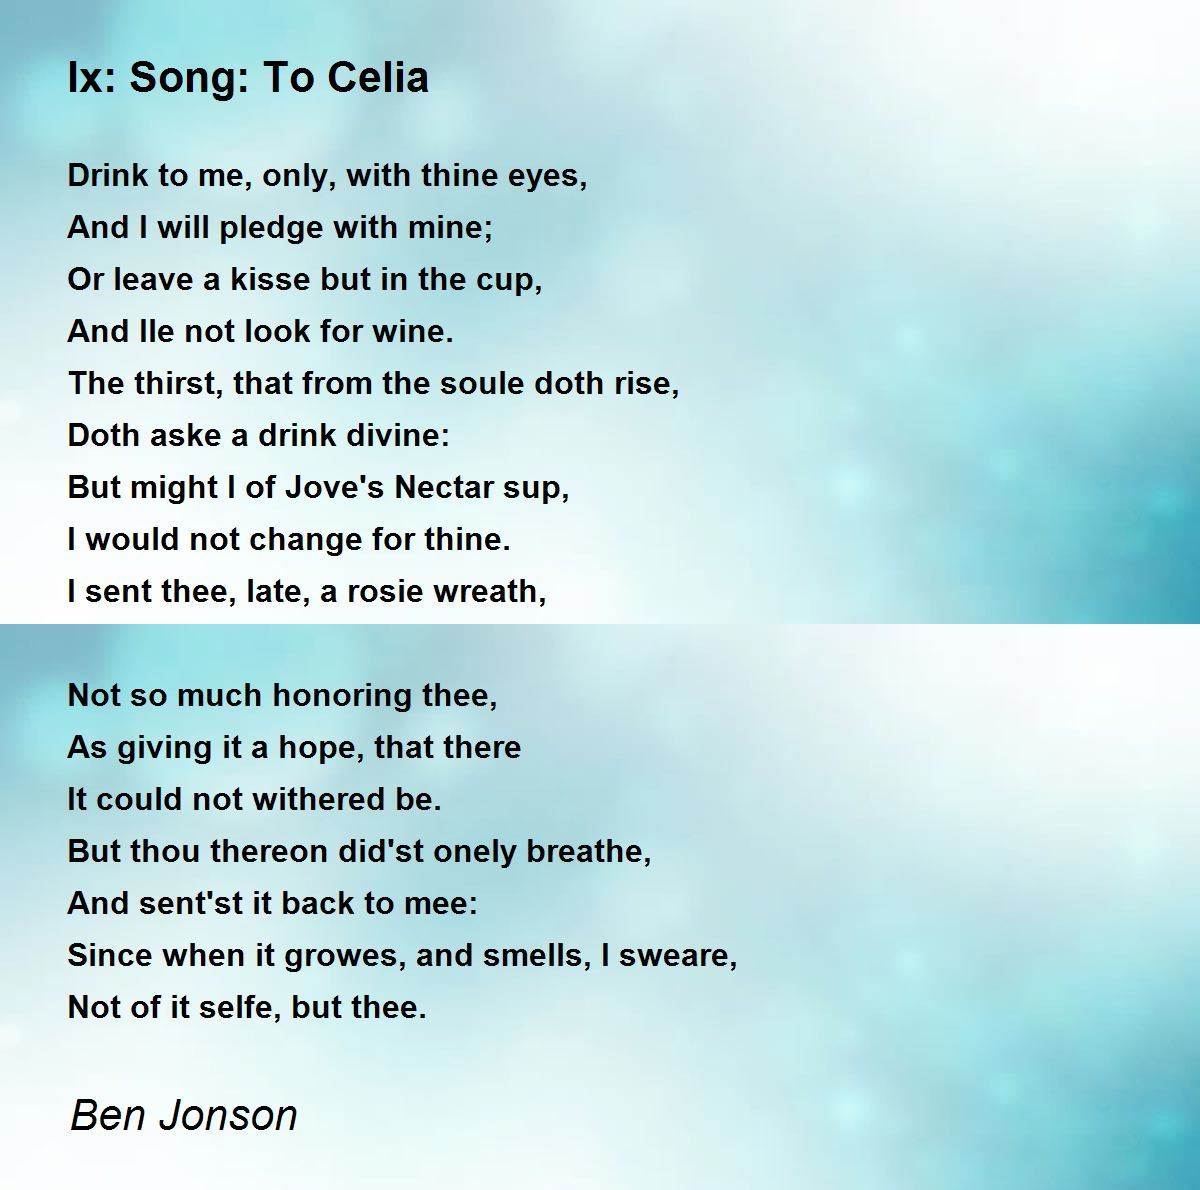 Текст песни девятое мая. Ben Jonson "Plays and poems". Celia poem by b en Johnson.